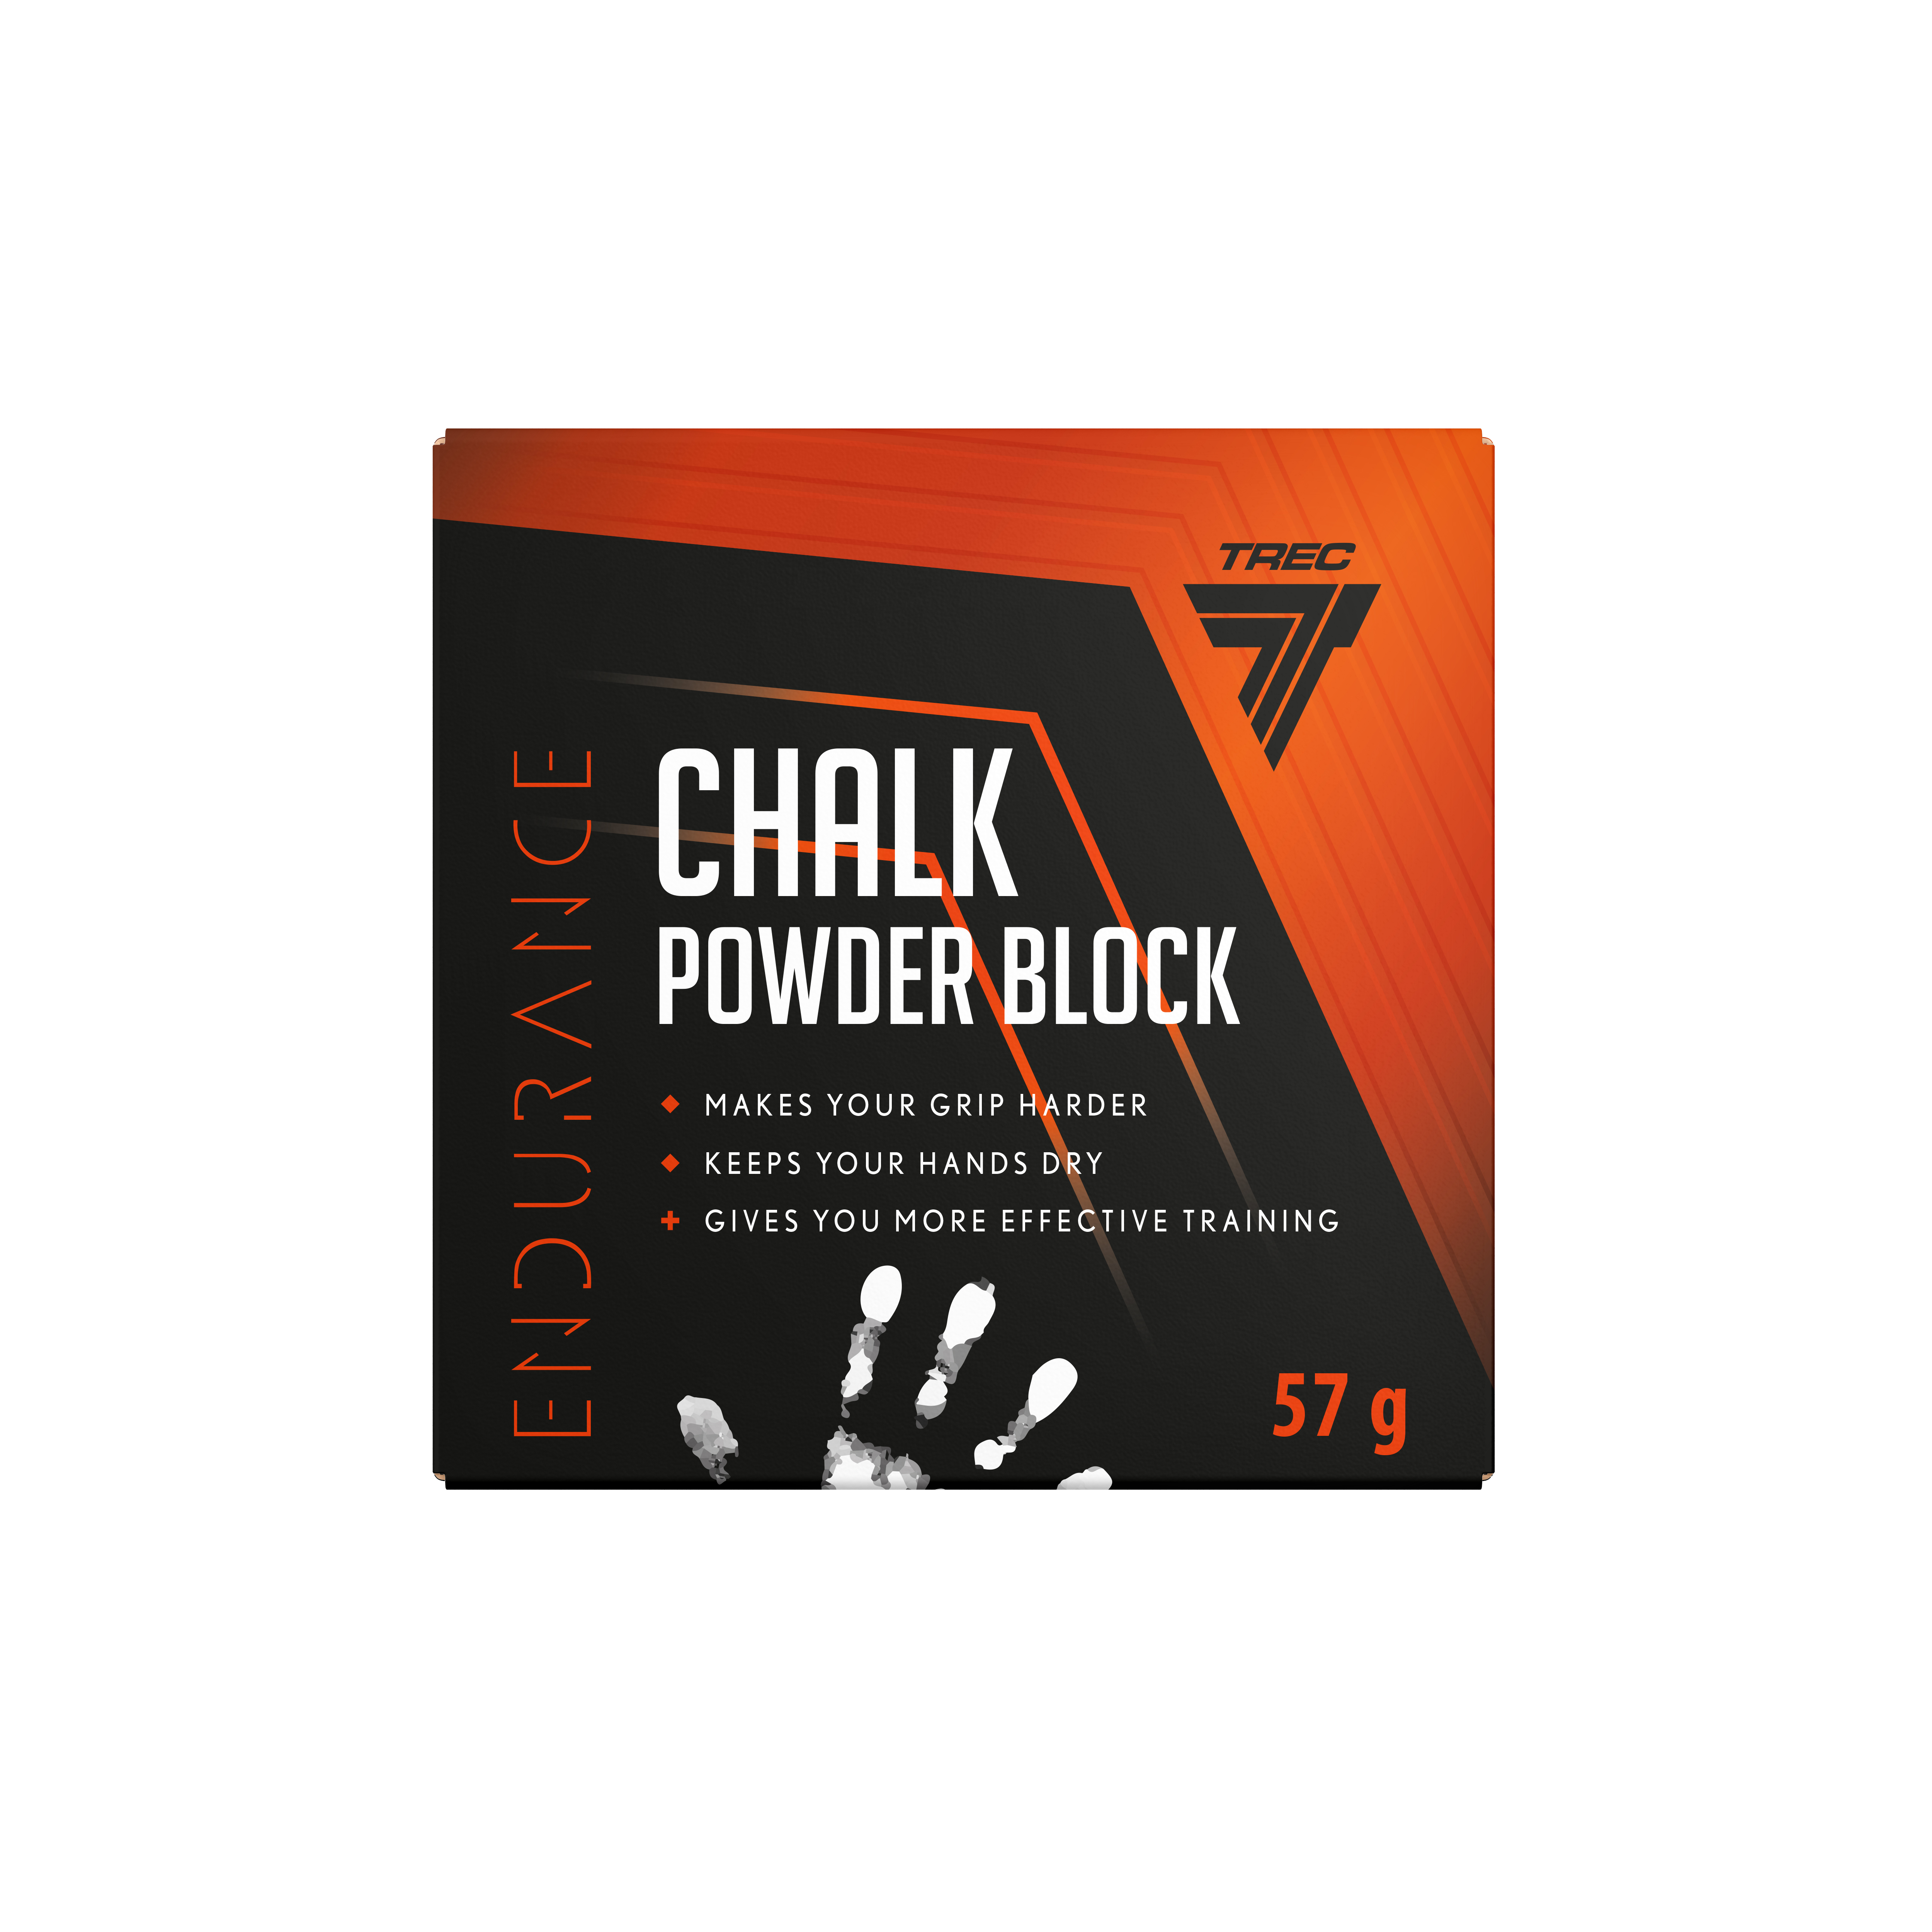 Magnezja w kostce 57 g CHALK POWDER BLOCK Magnezja w kostce CHALK POWDER BLOCK